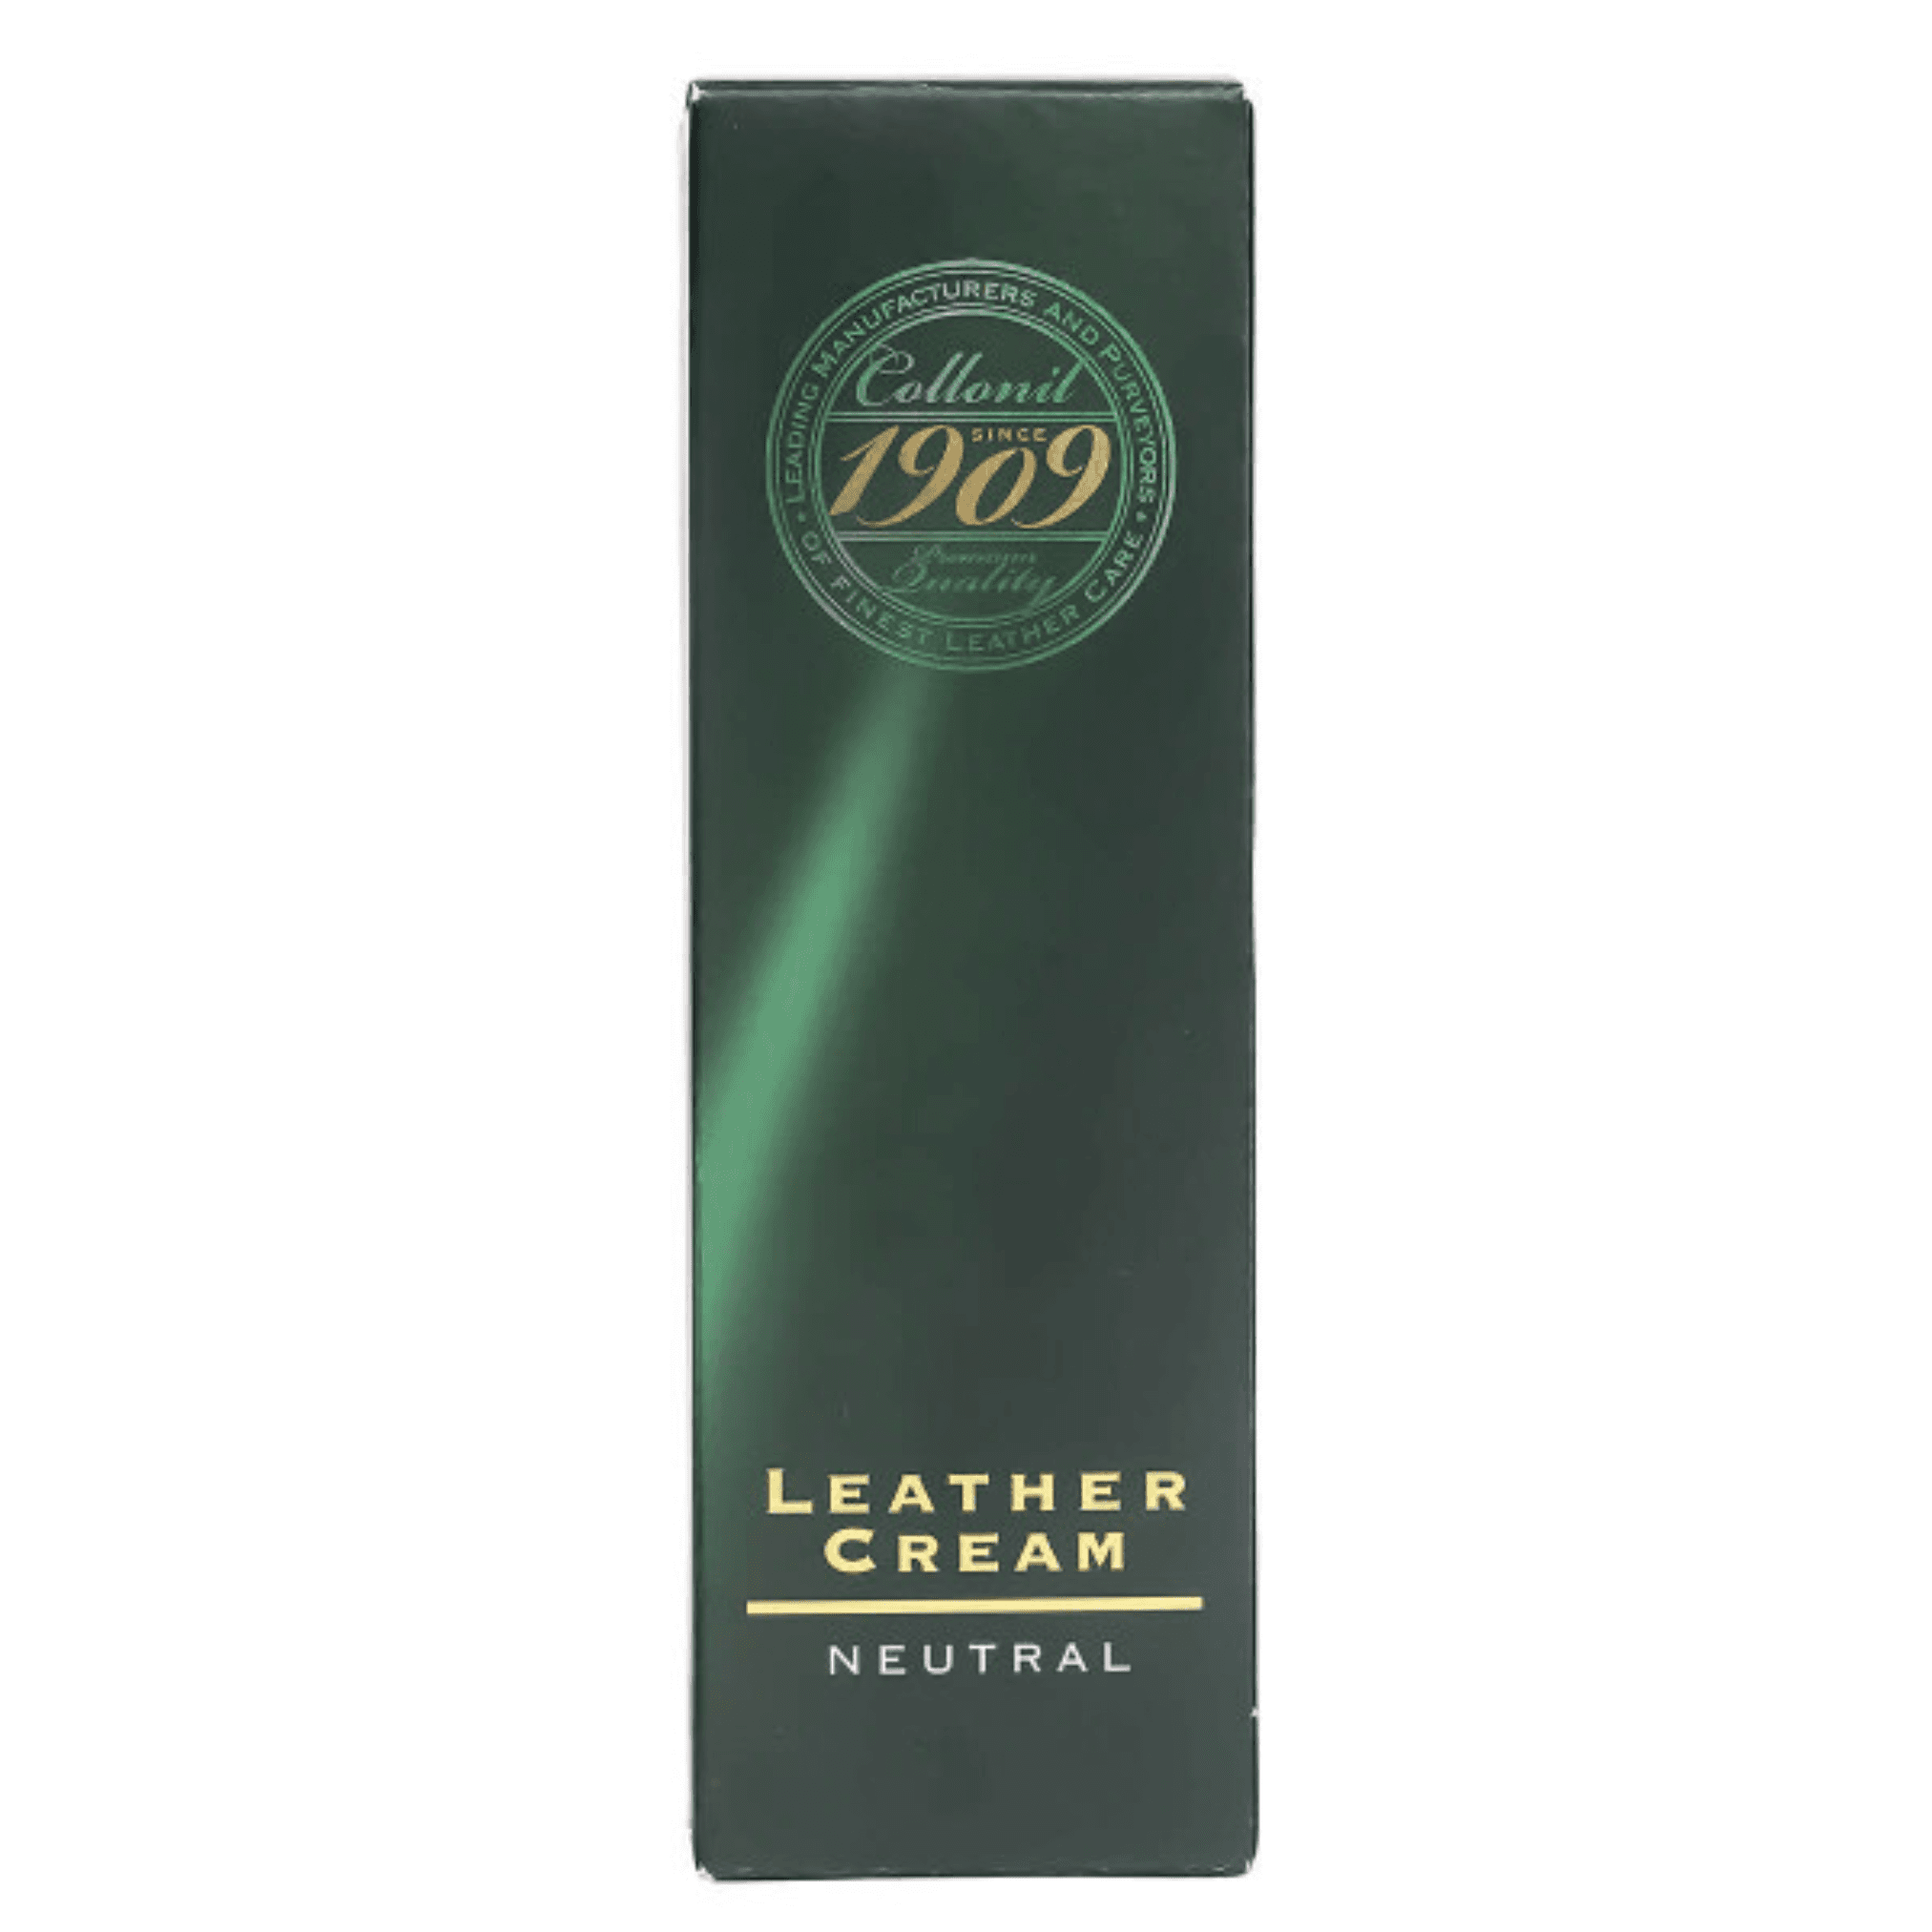 1909 Leather Cream - hoito